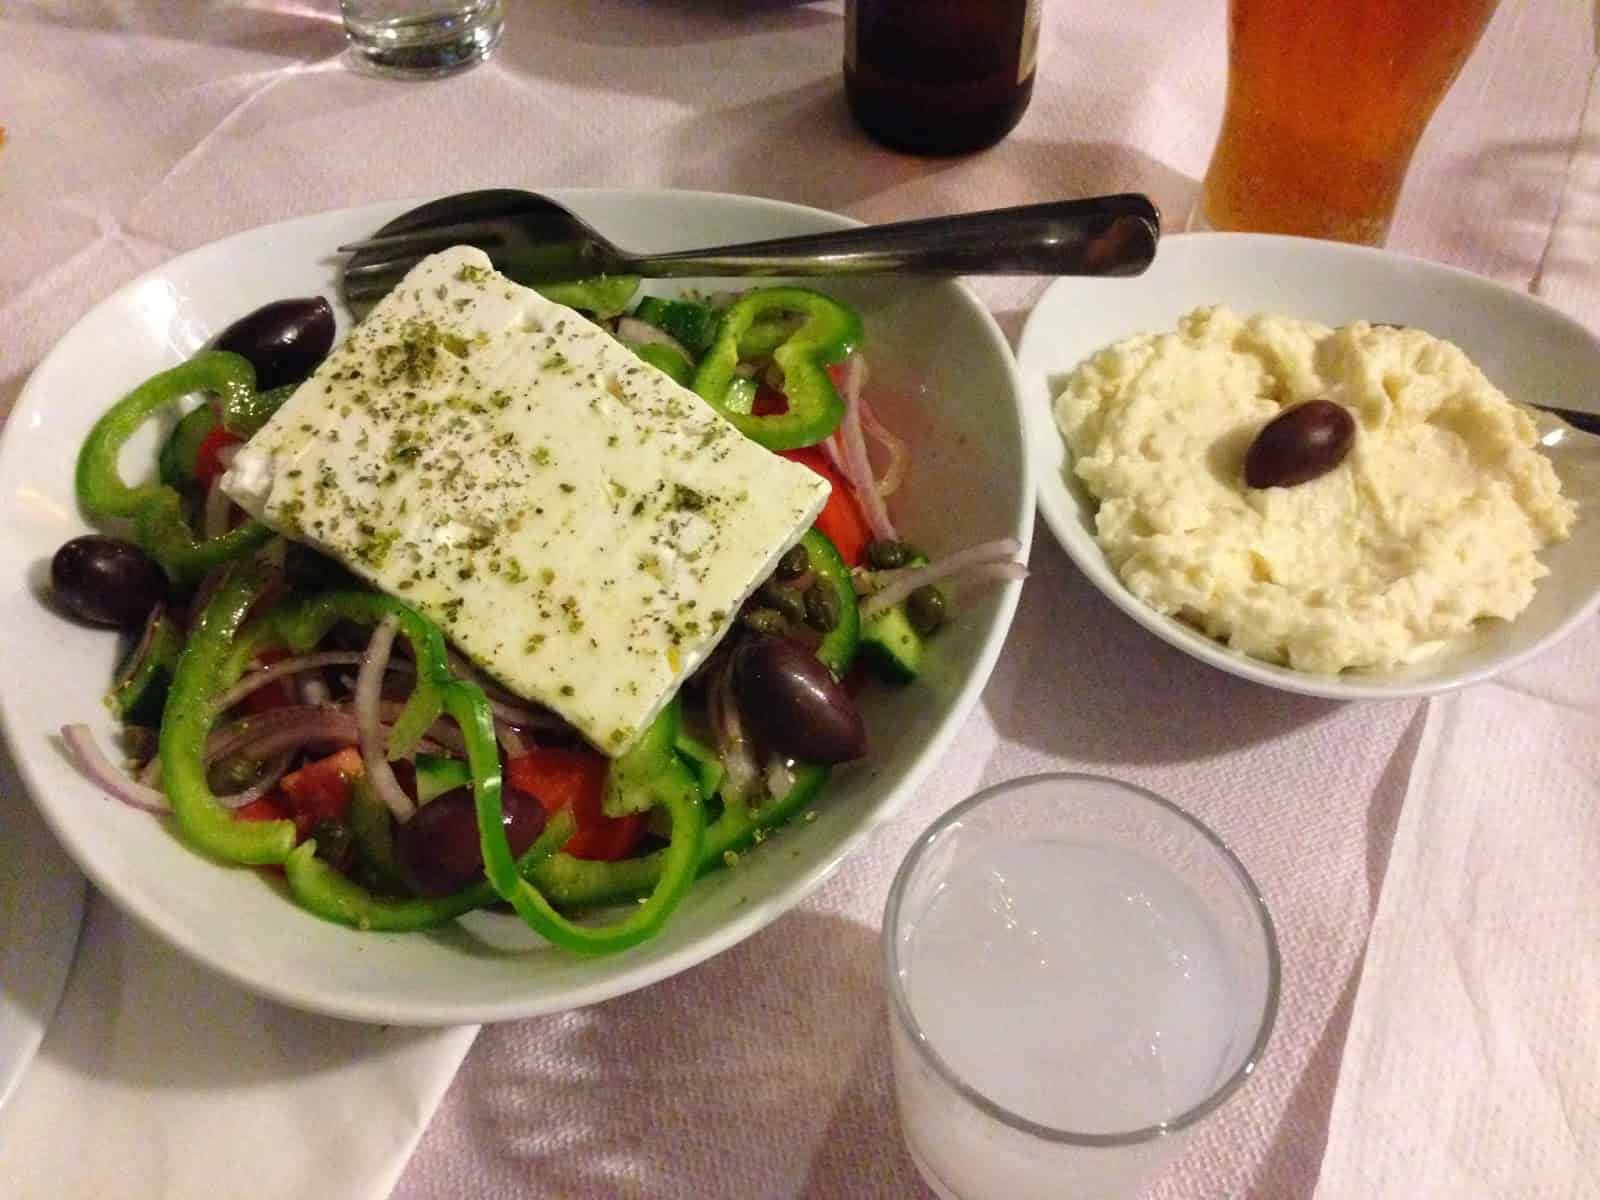 Greek village salad and skordalia at Bahari in Chios, Greece